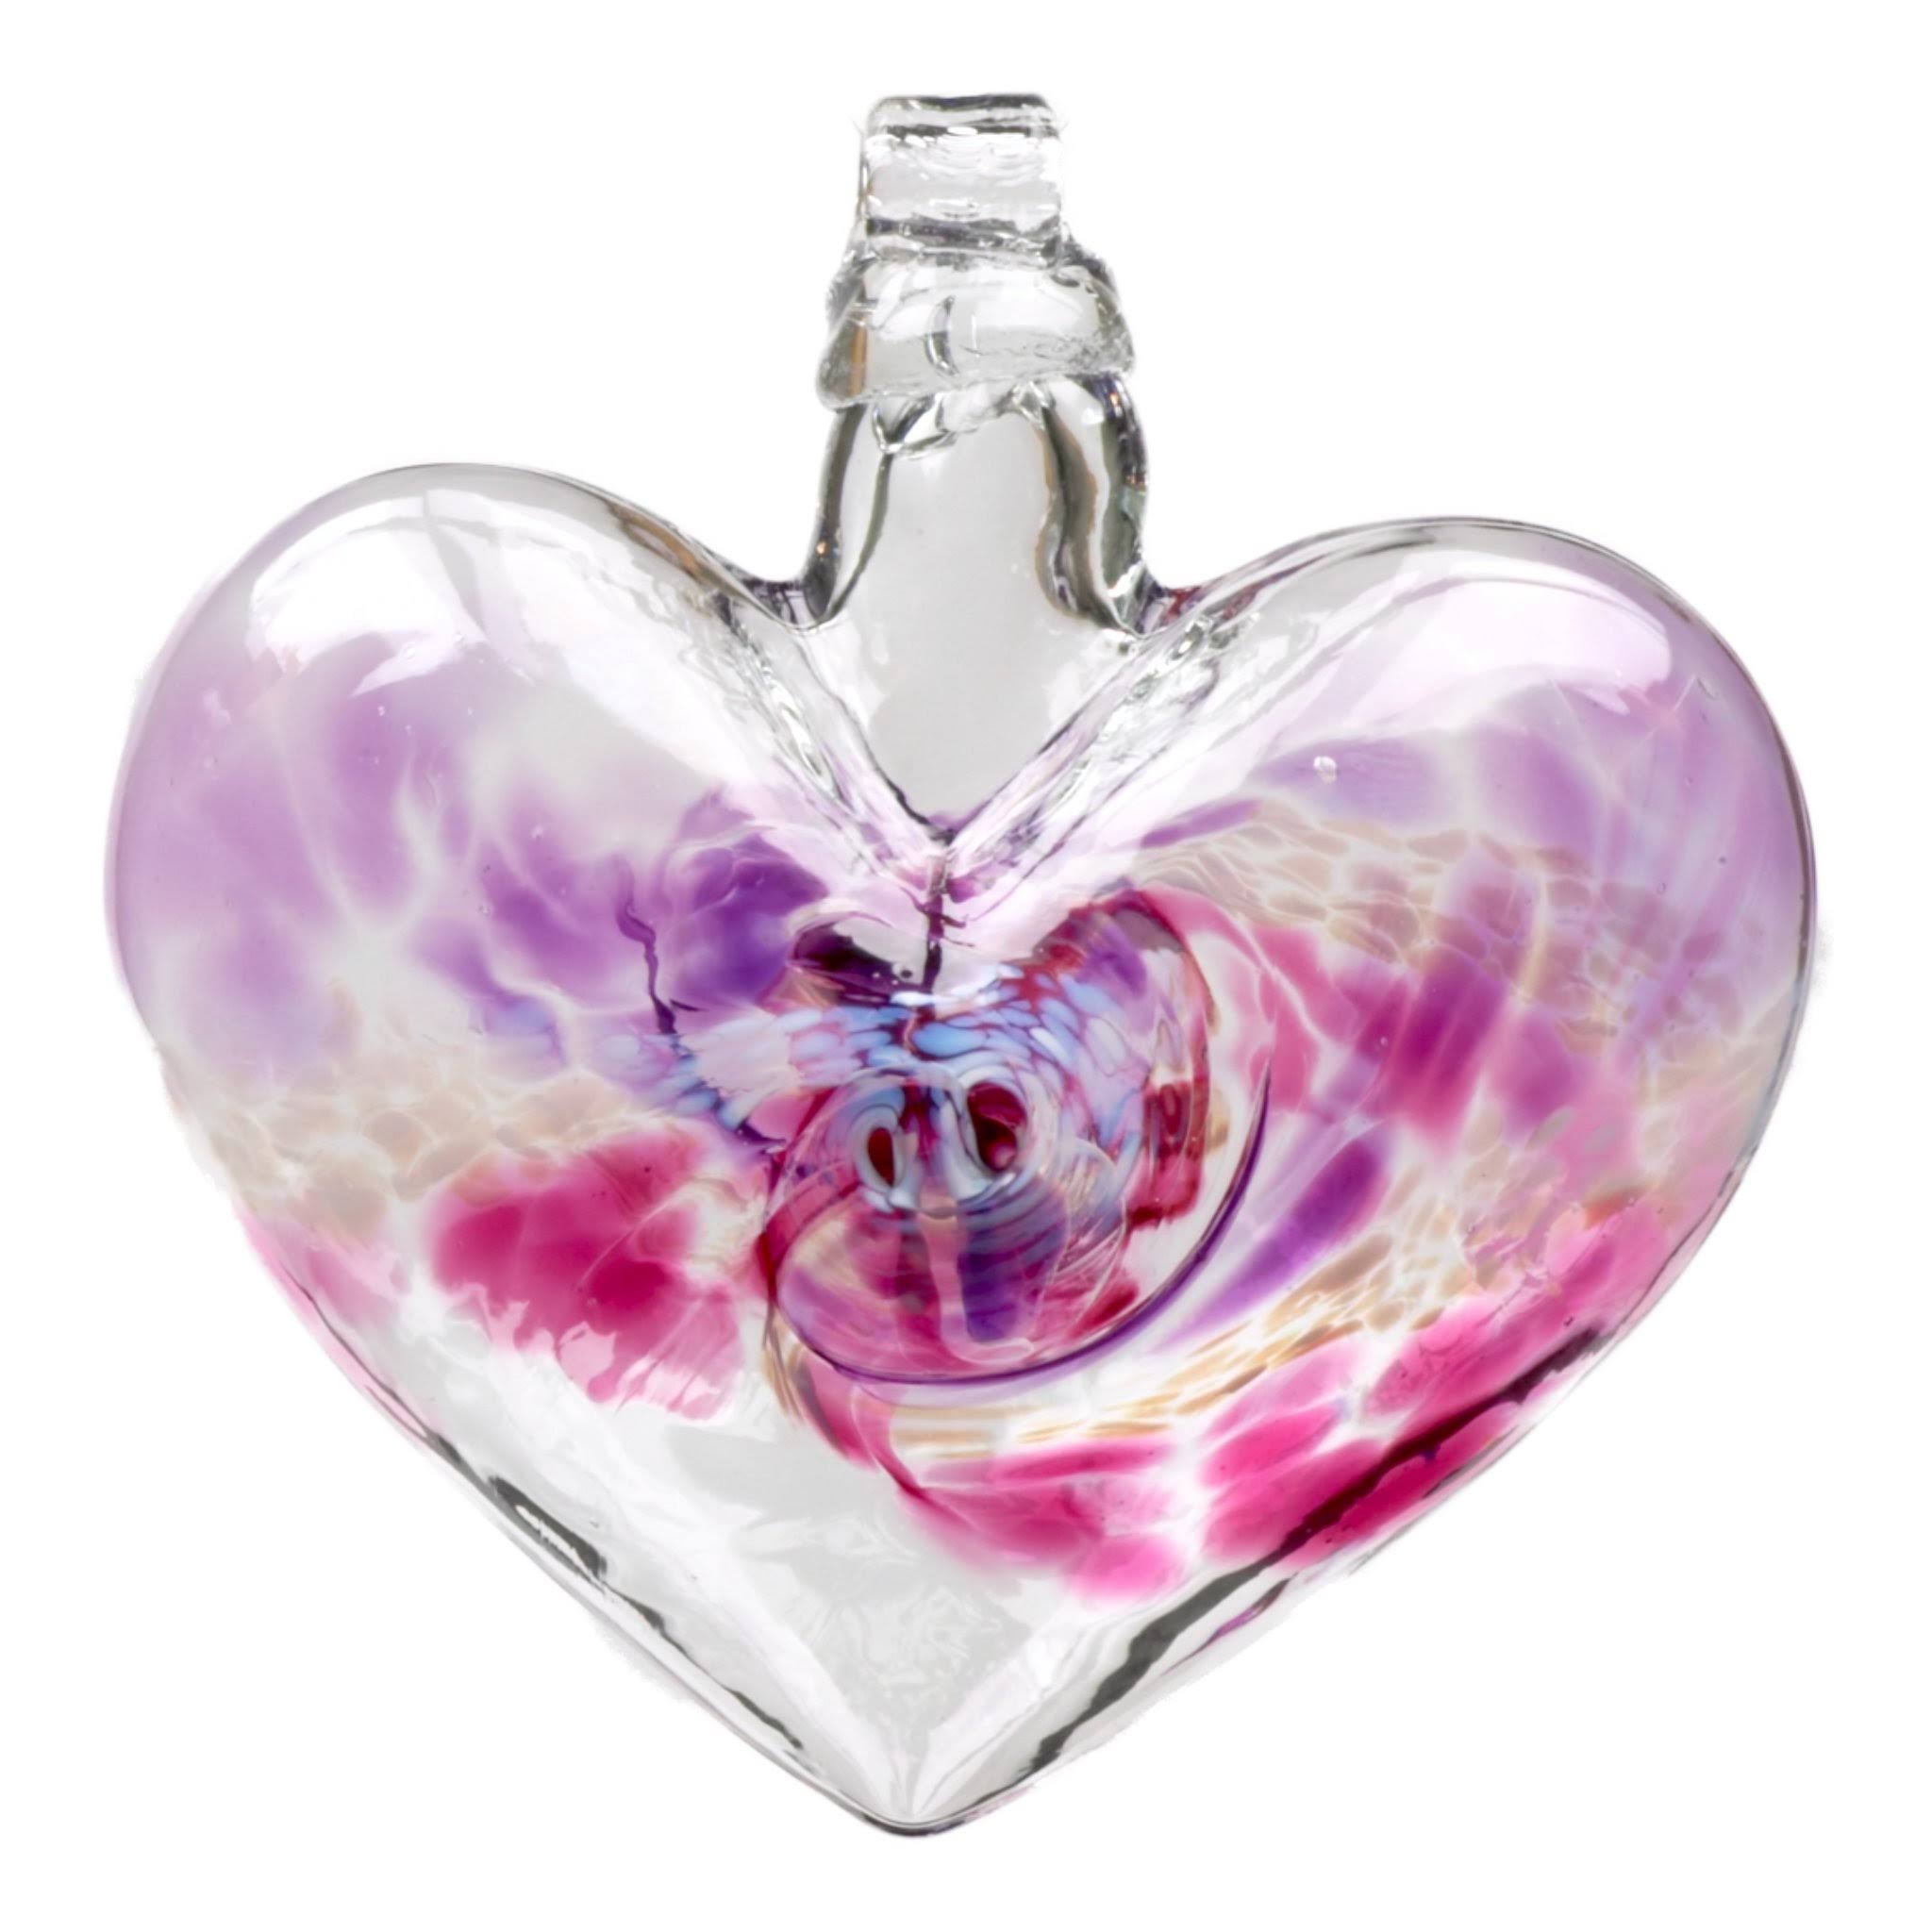 Kitras 3-Inch Van Glow Heart Glass Ornament, Purple/Pink